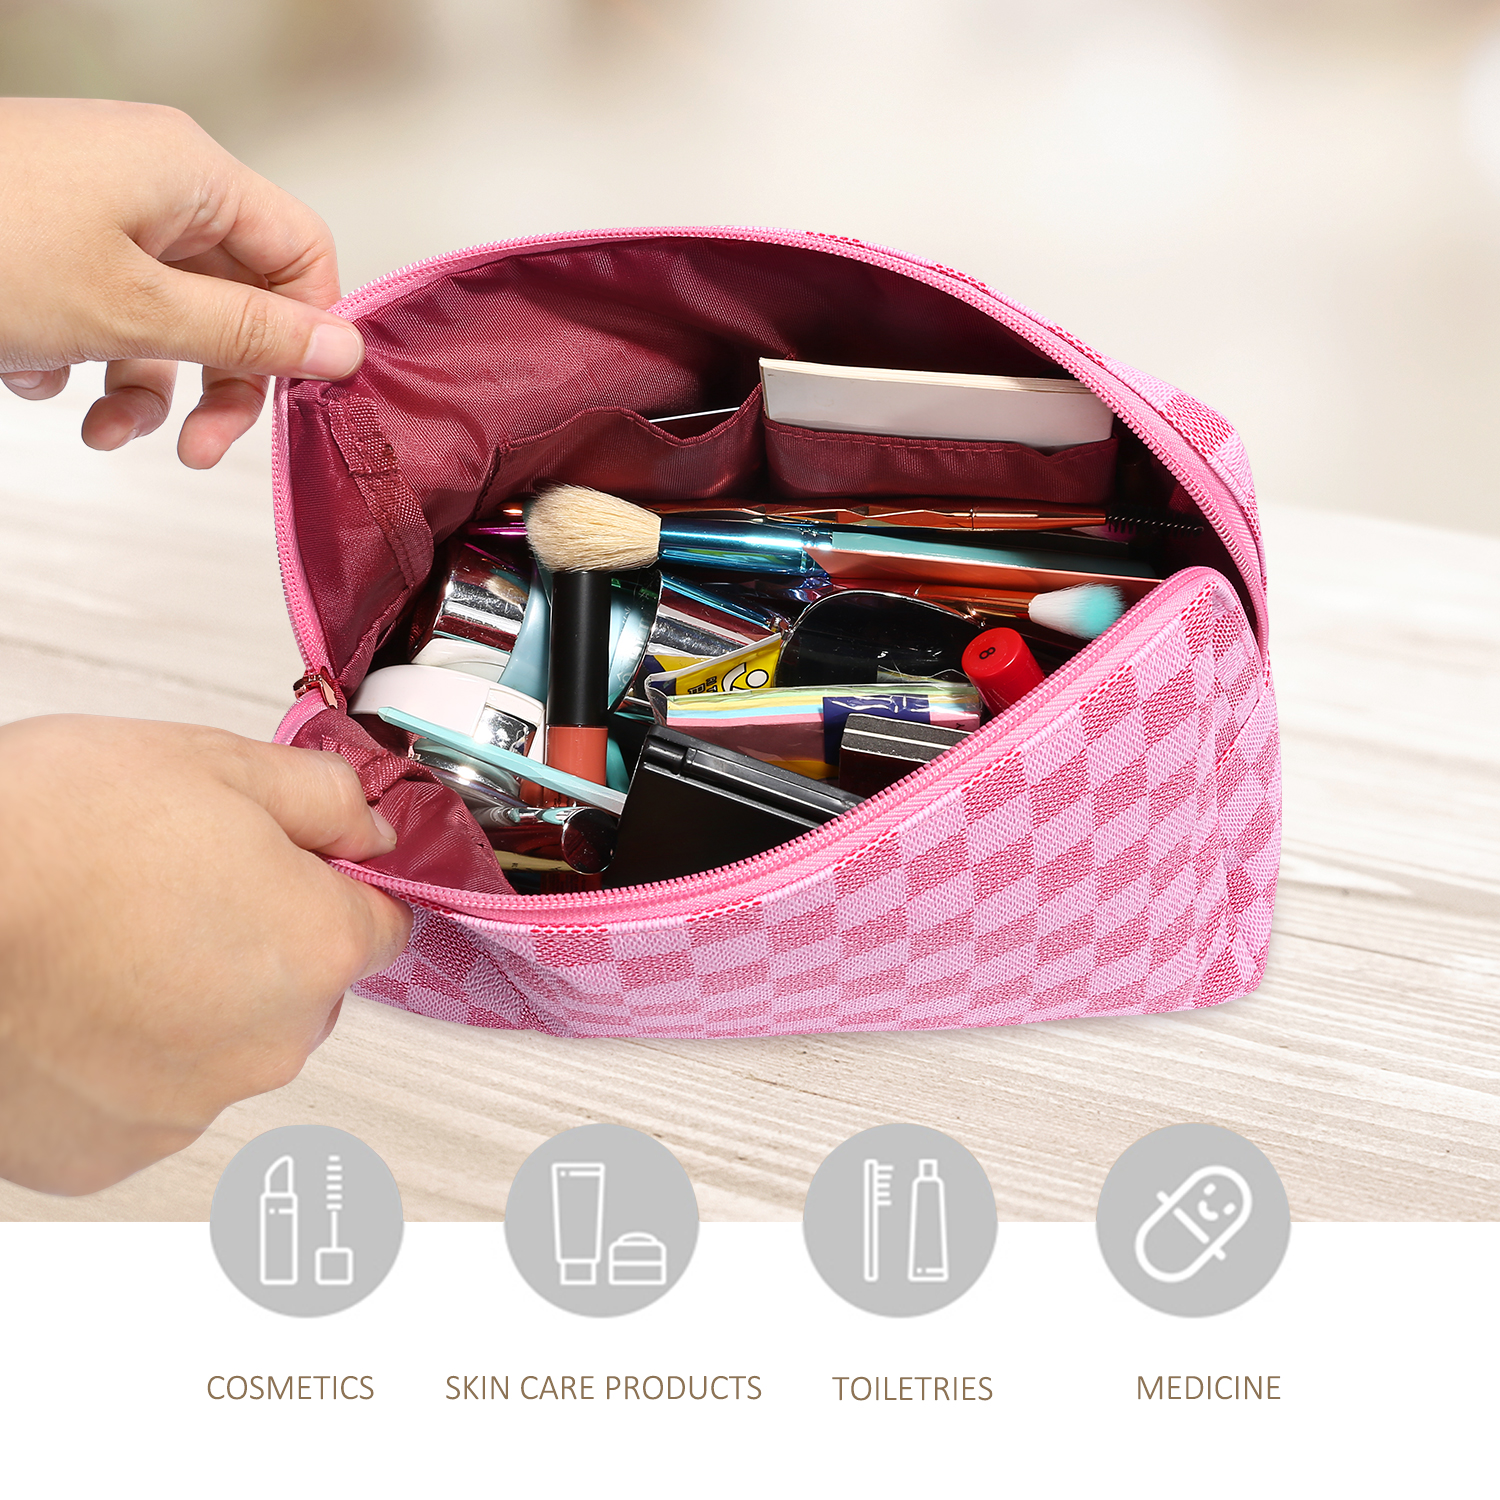 Aokur Makeup Bag Checkered Cosmetic Bag Large Travel Toiletry Organizer for  Women Girls Brown 